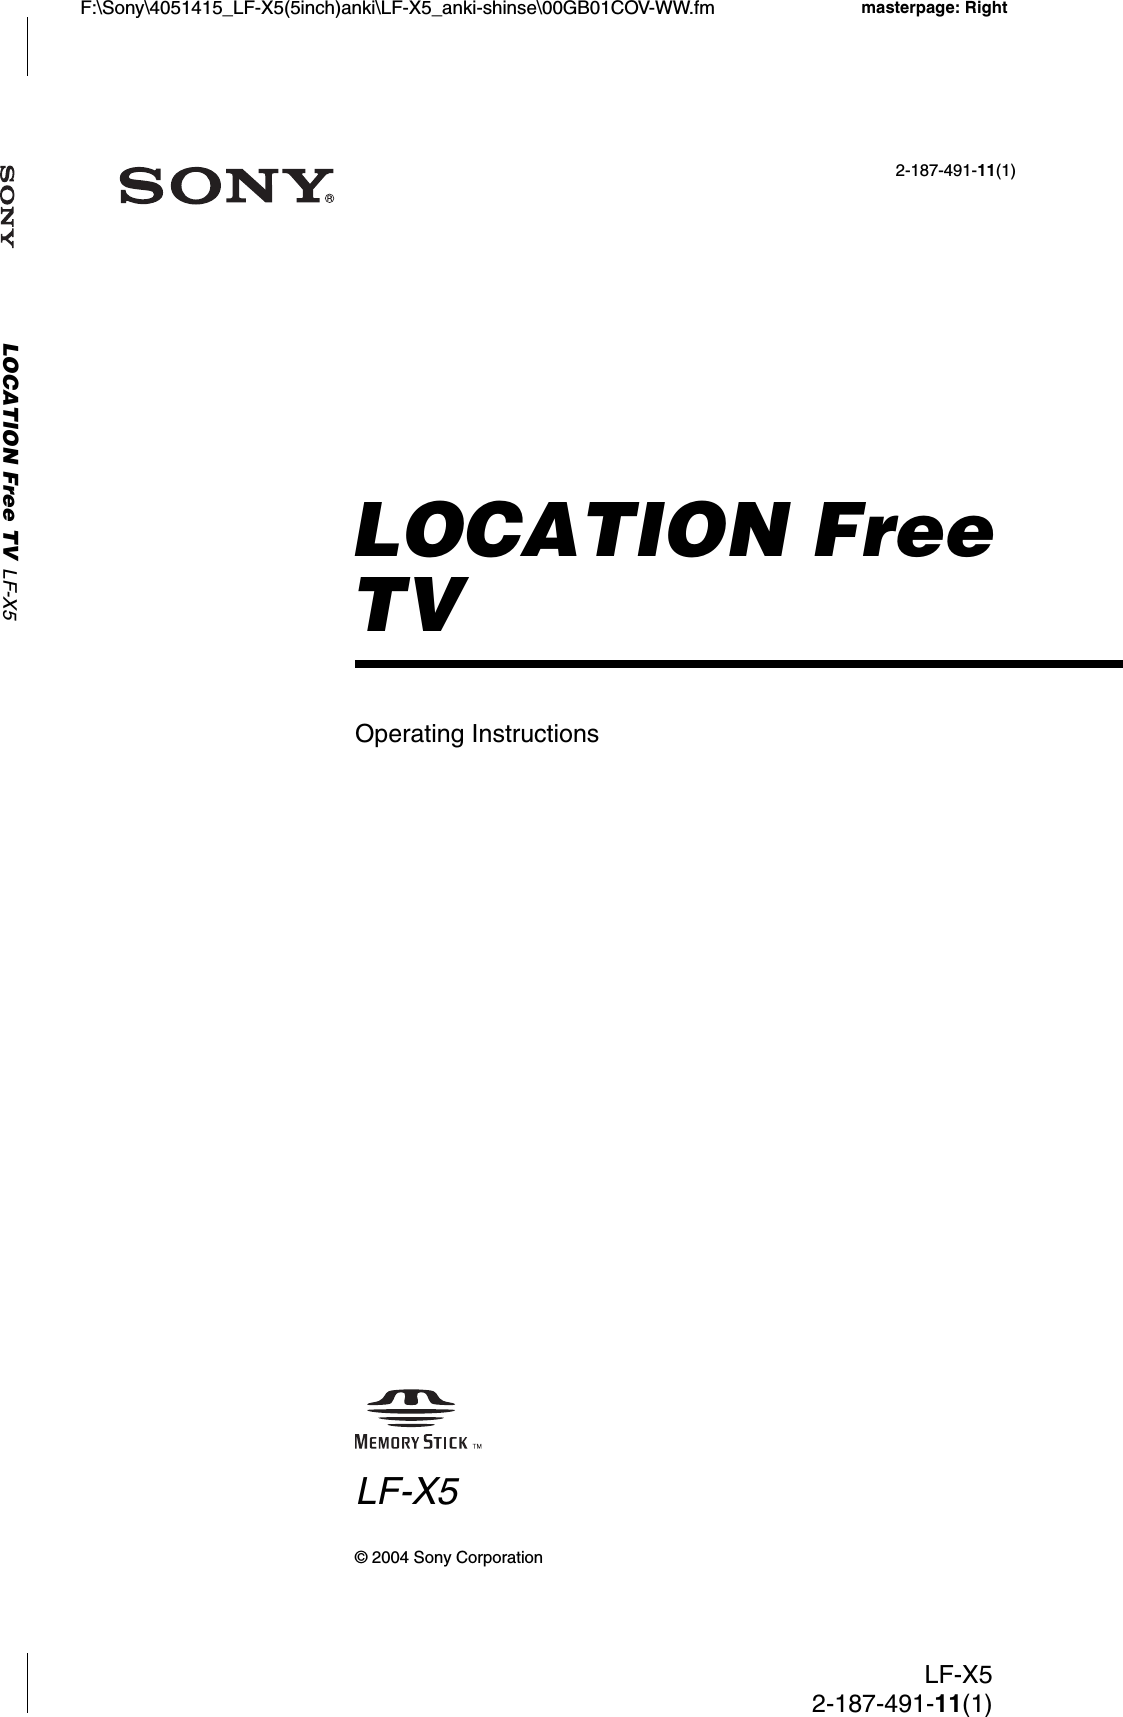 Operating Instructions2-187-491-11(1)LOCATION Free TVLF-X5© 2004 Sony CorporationLOCATION Free TV LF-X5F:\Sony\4051415_LF-X5(5inch)anki\LF-X5_anki-shinse\00GB01COV-WW.fm masterpage: RightLF-X52-187-491-11(1)